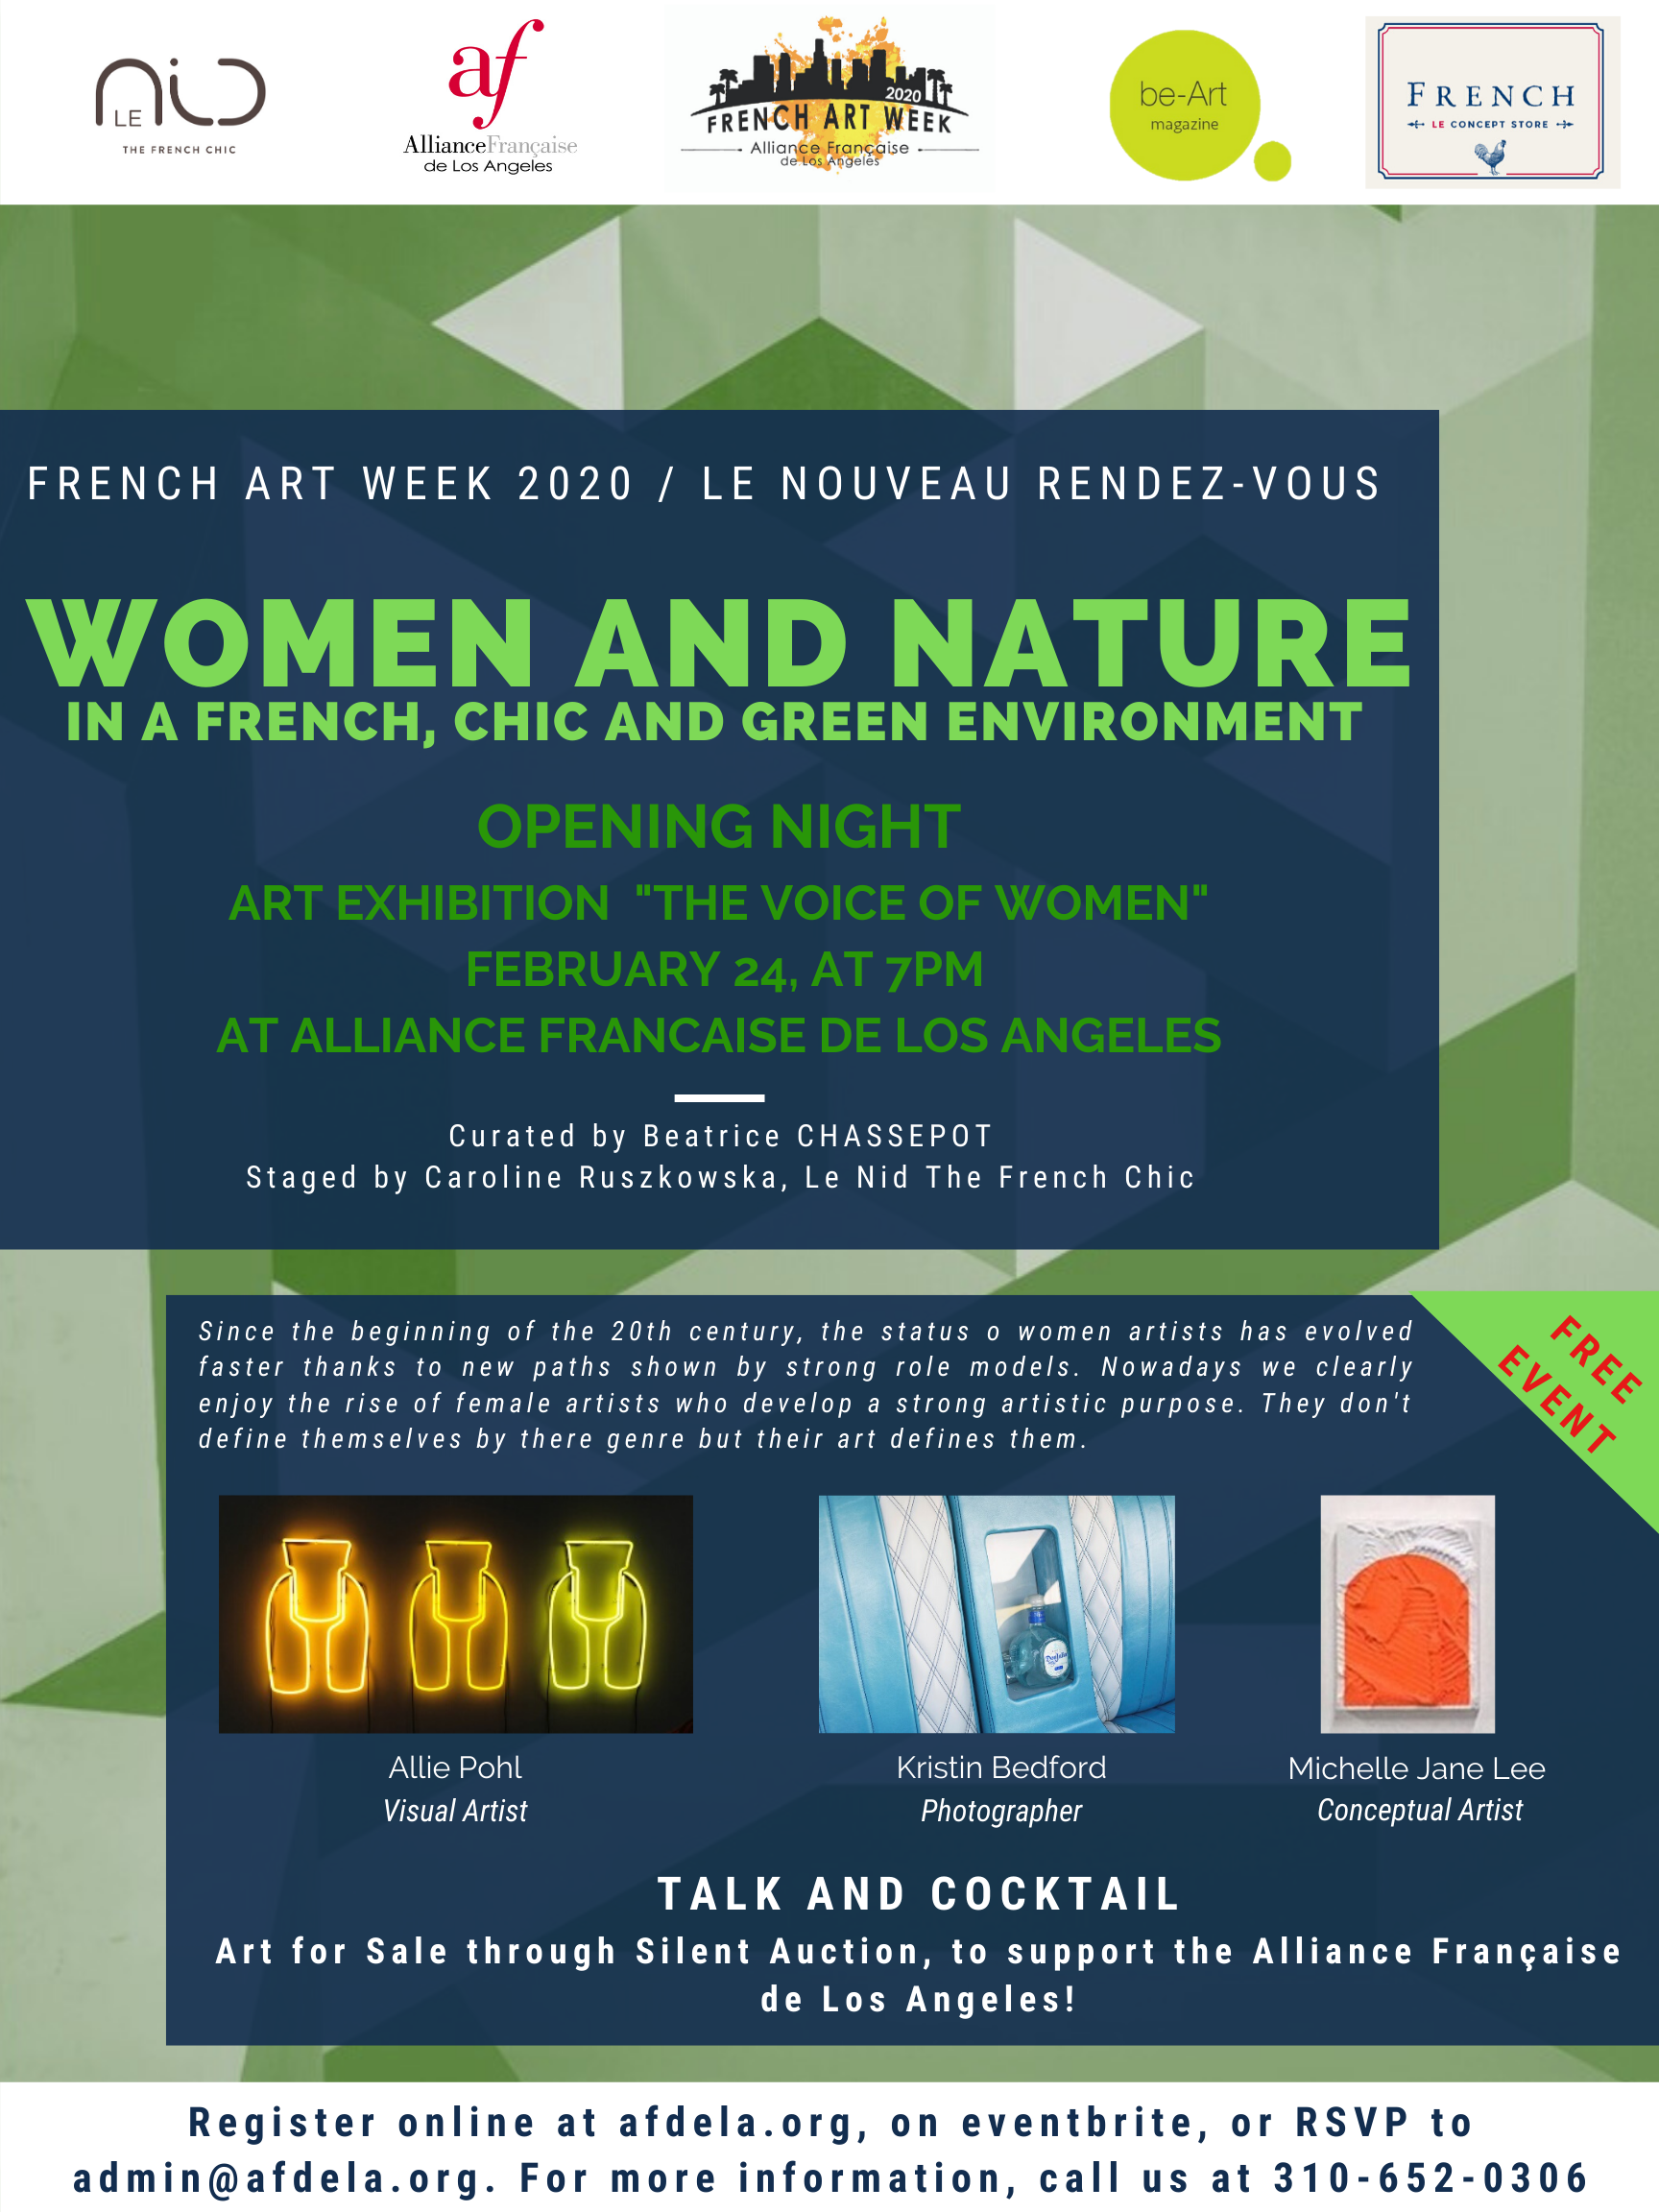 FRENCH ART WEEK 2020- WOMEN AND NATURE - Opening Night